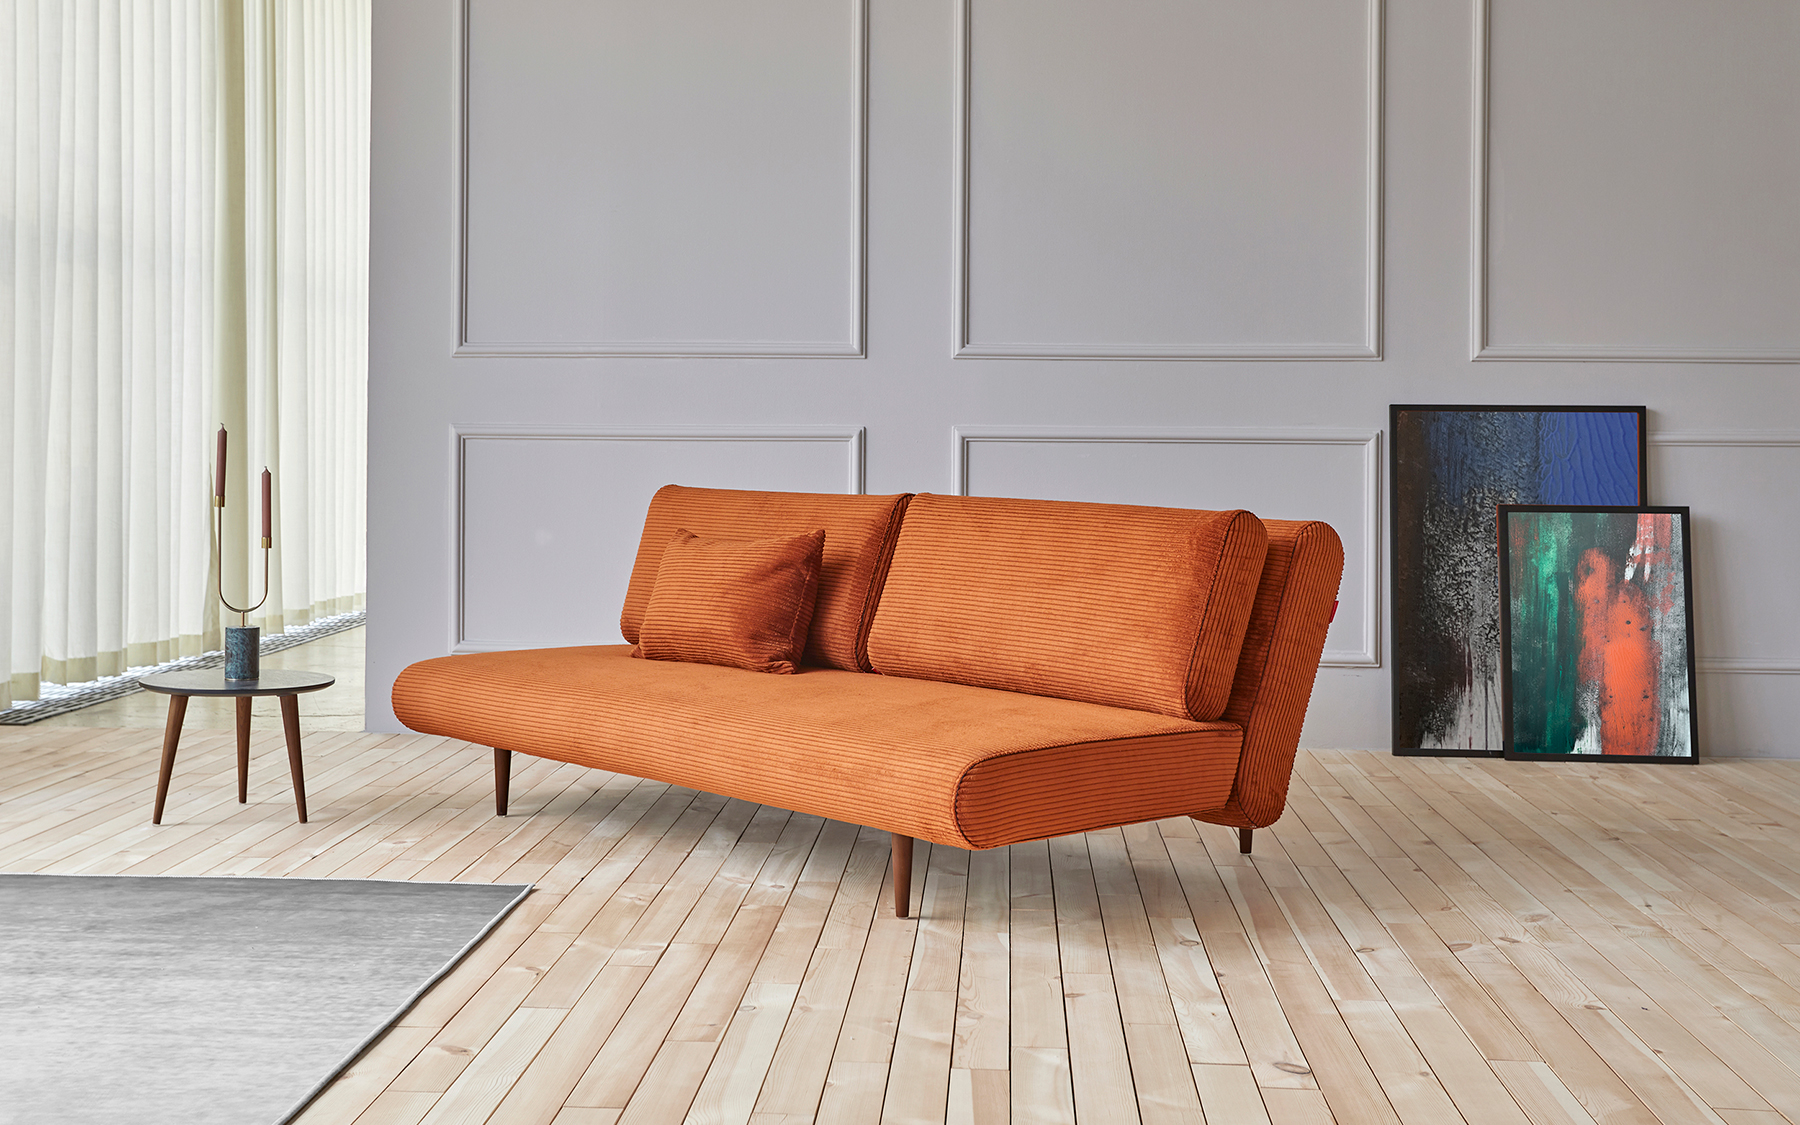 lounger sofa bed sage wood fabric espresso frame